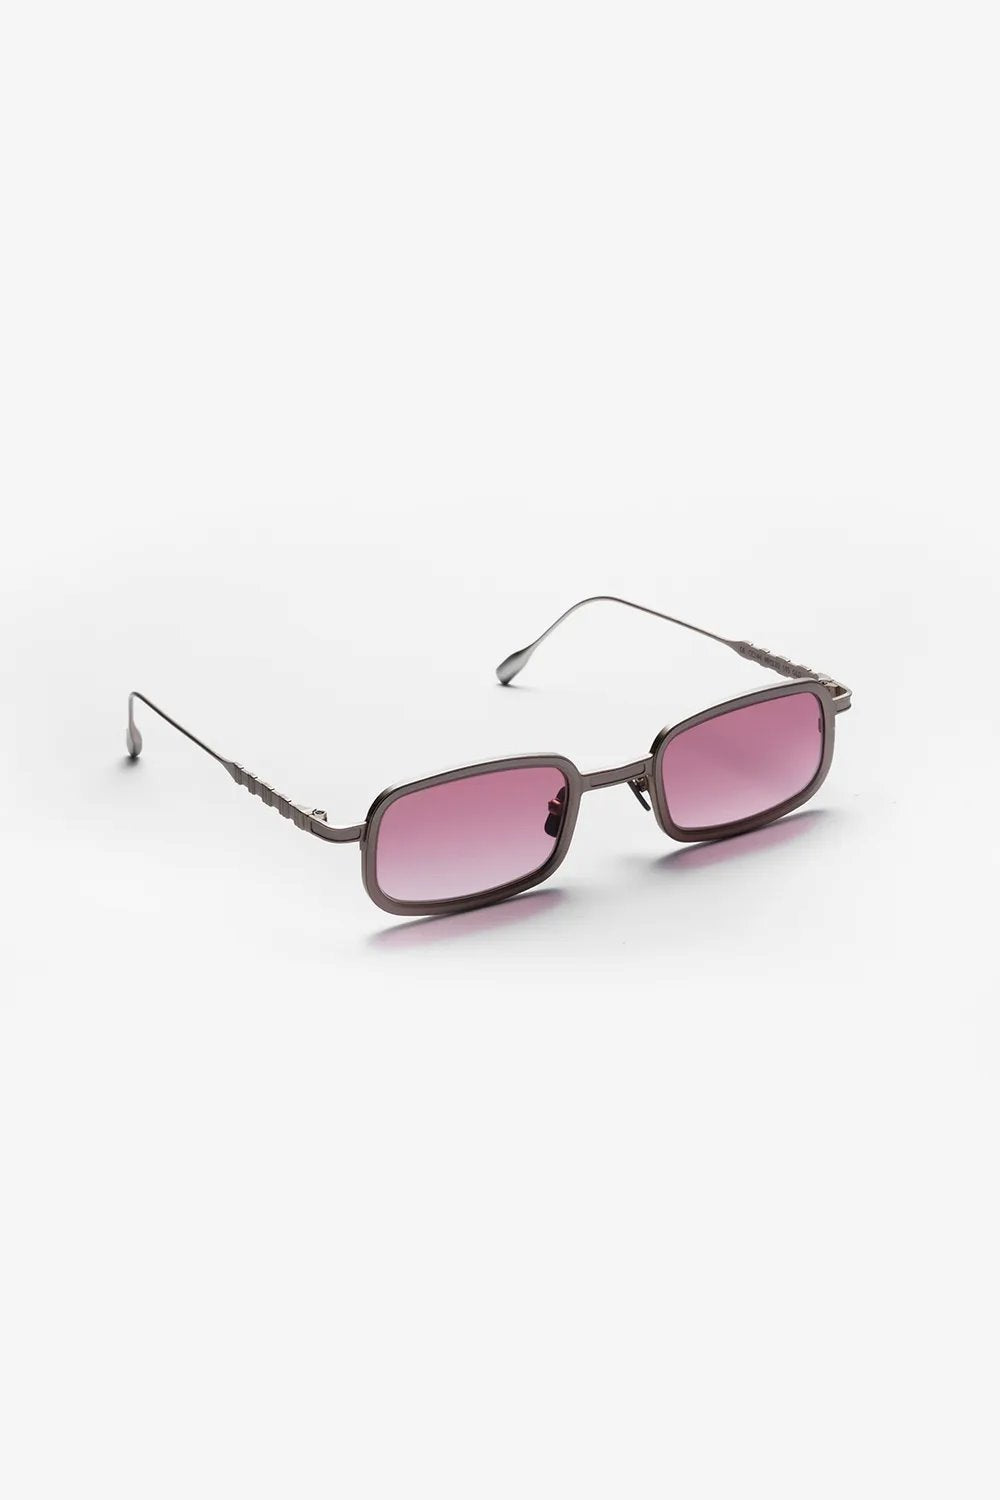 Capote - CC144 Sunglasses Capote Pink ONES 